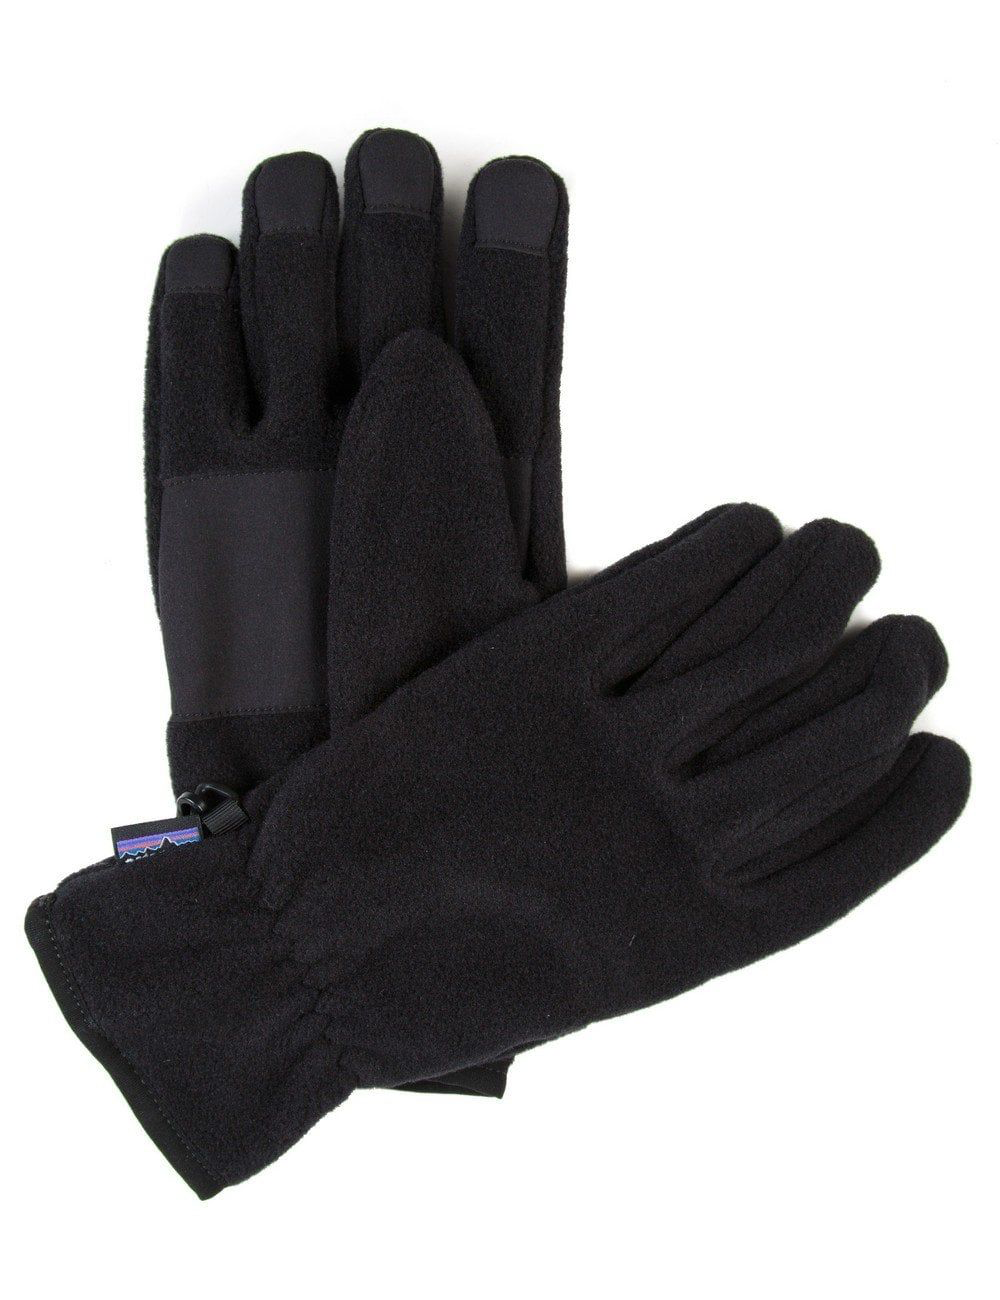 Patagonia Synchilla Fleece Gloves - Black - XL